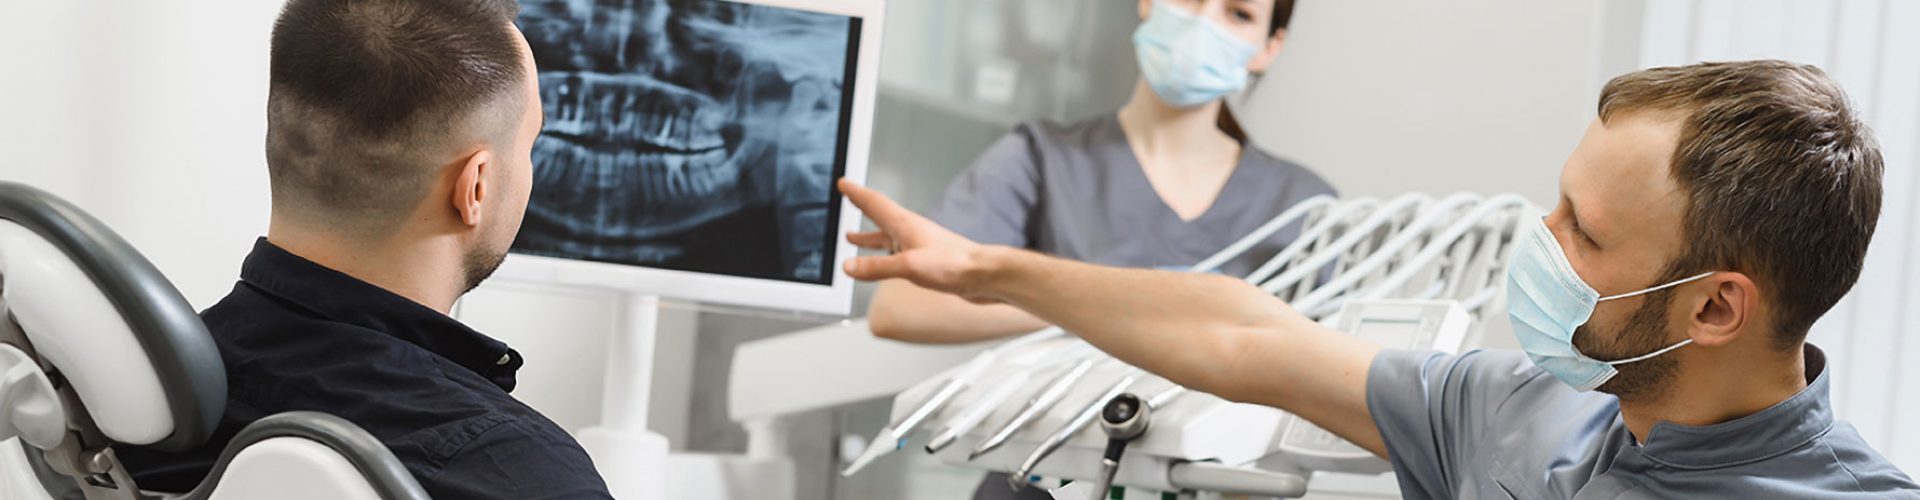 Dentist IMAGINASOFT radiology equipment patient